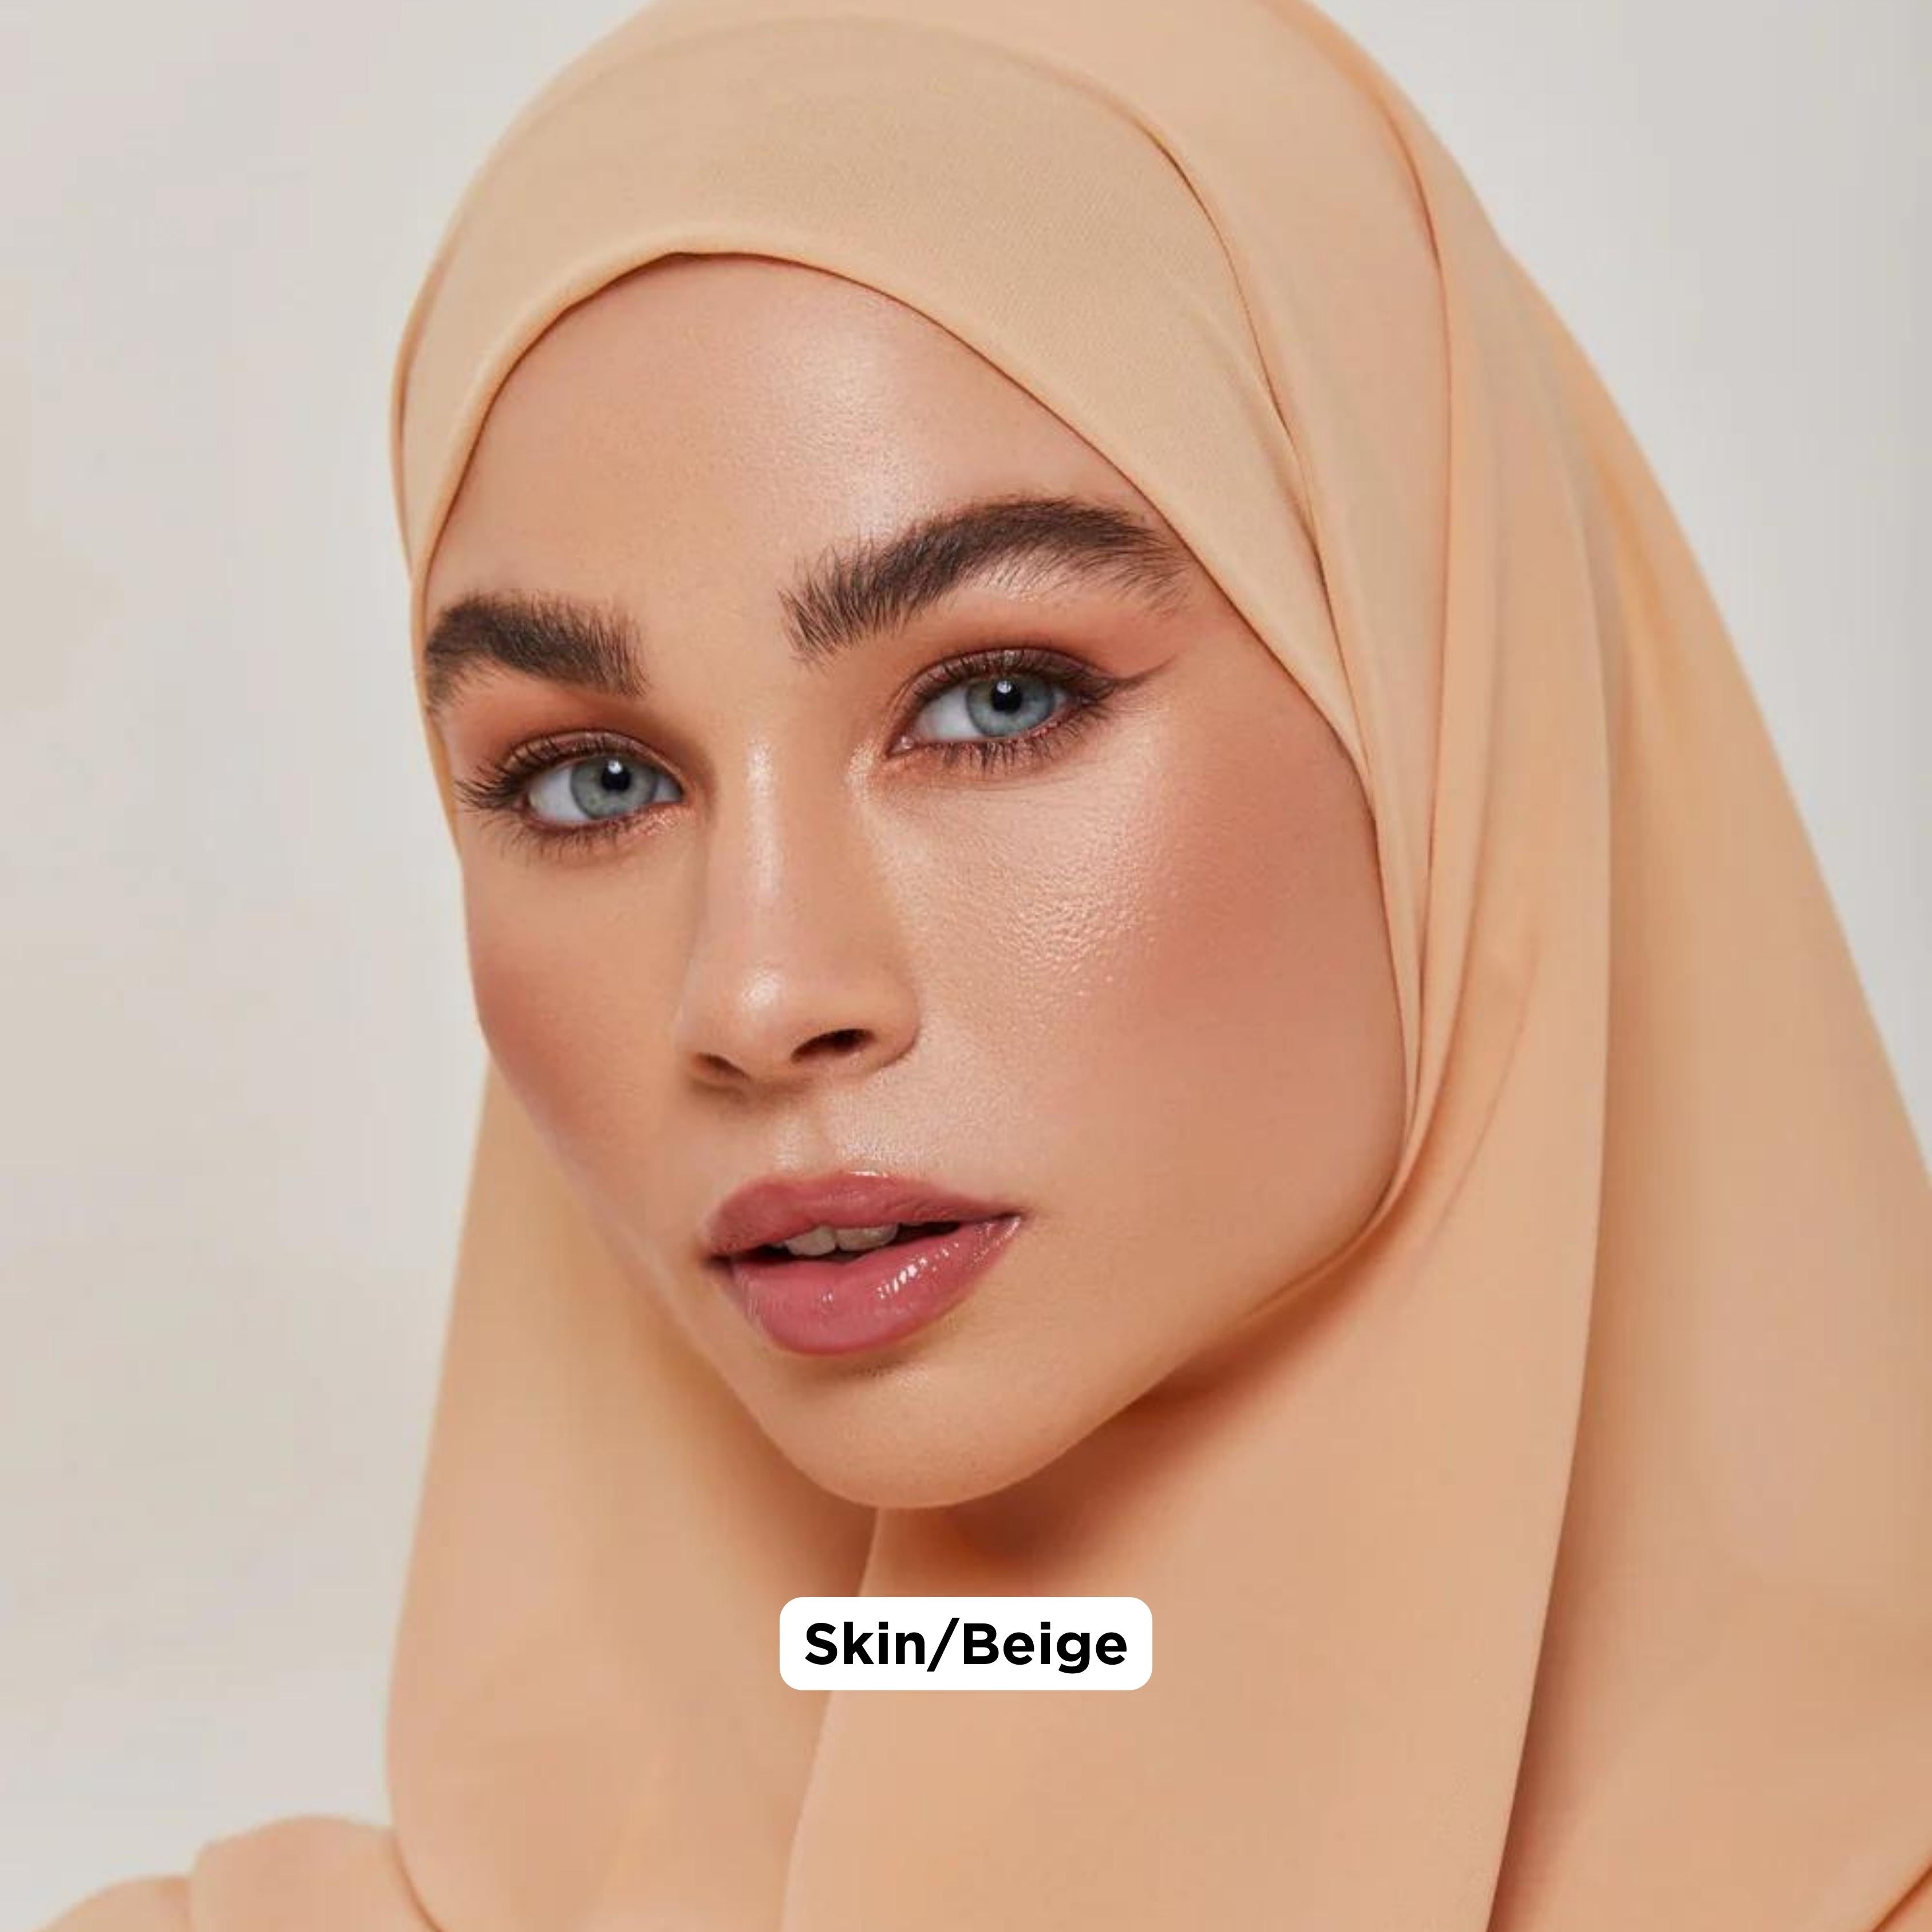 Malaysian Pinless Hijab With Built in Inlay Cap